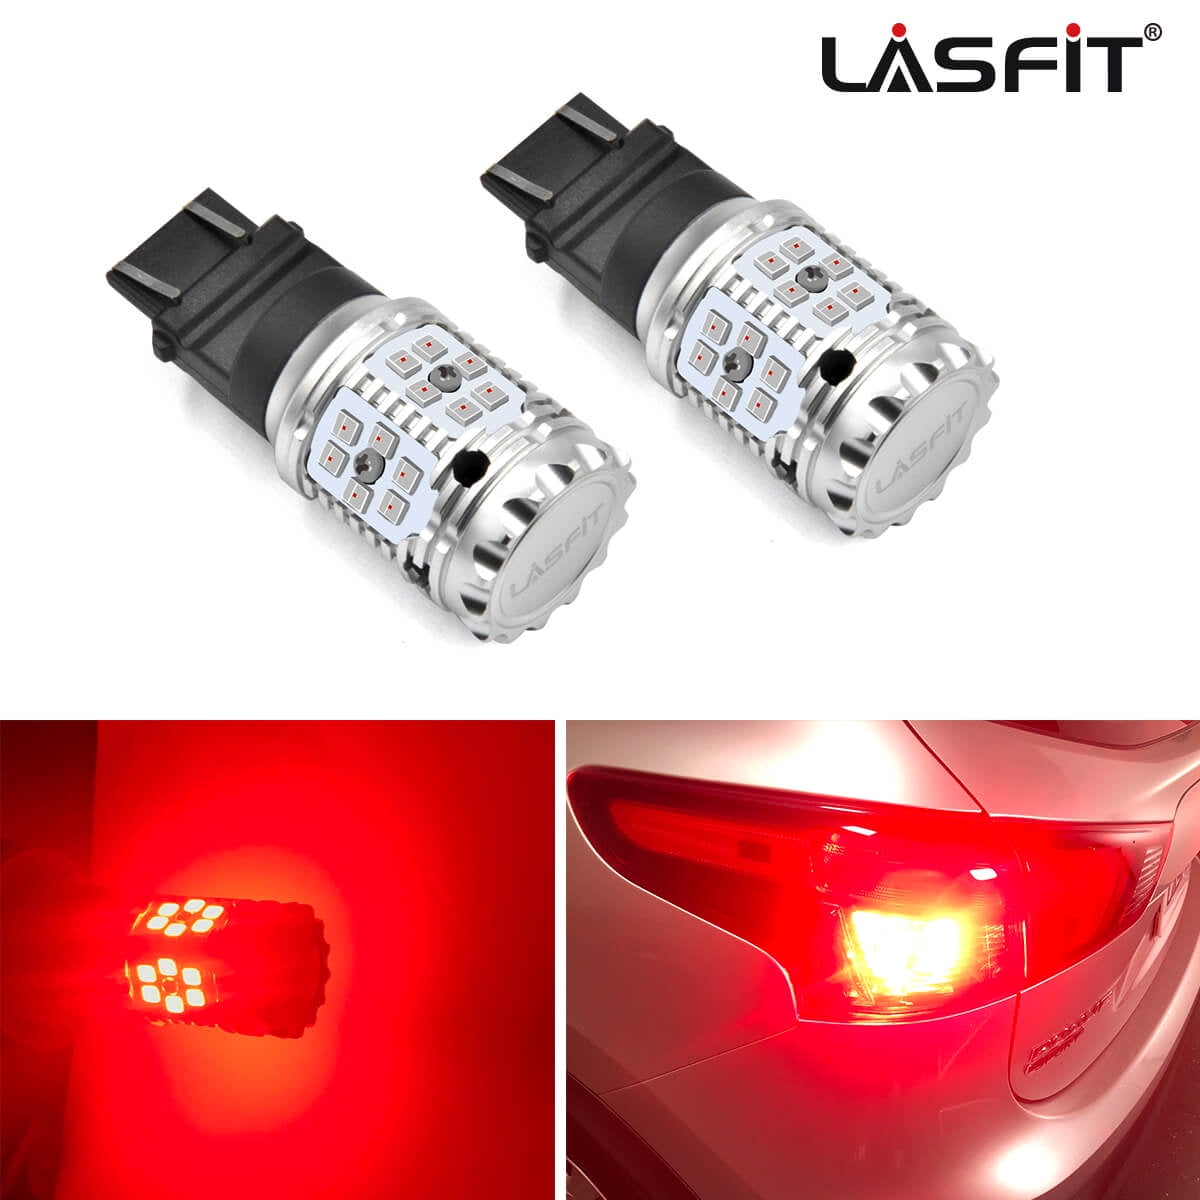 LASFIT 921 LED Bulbs Backup Reverse Light for Dodge Ram 1500 2500 3500 2007-2010 